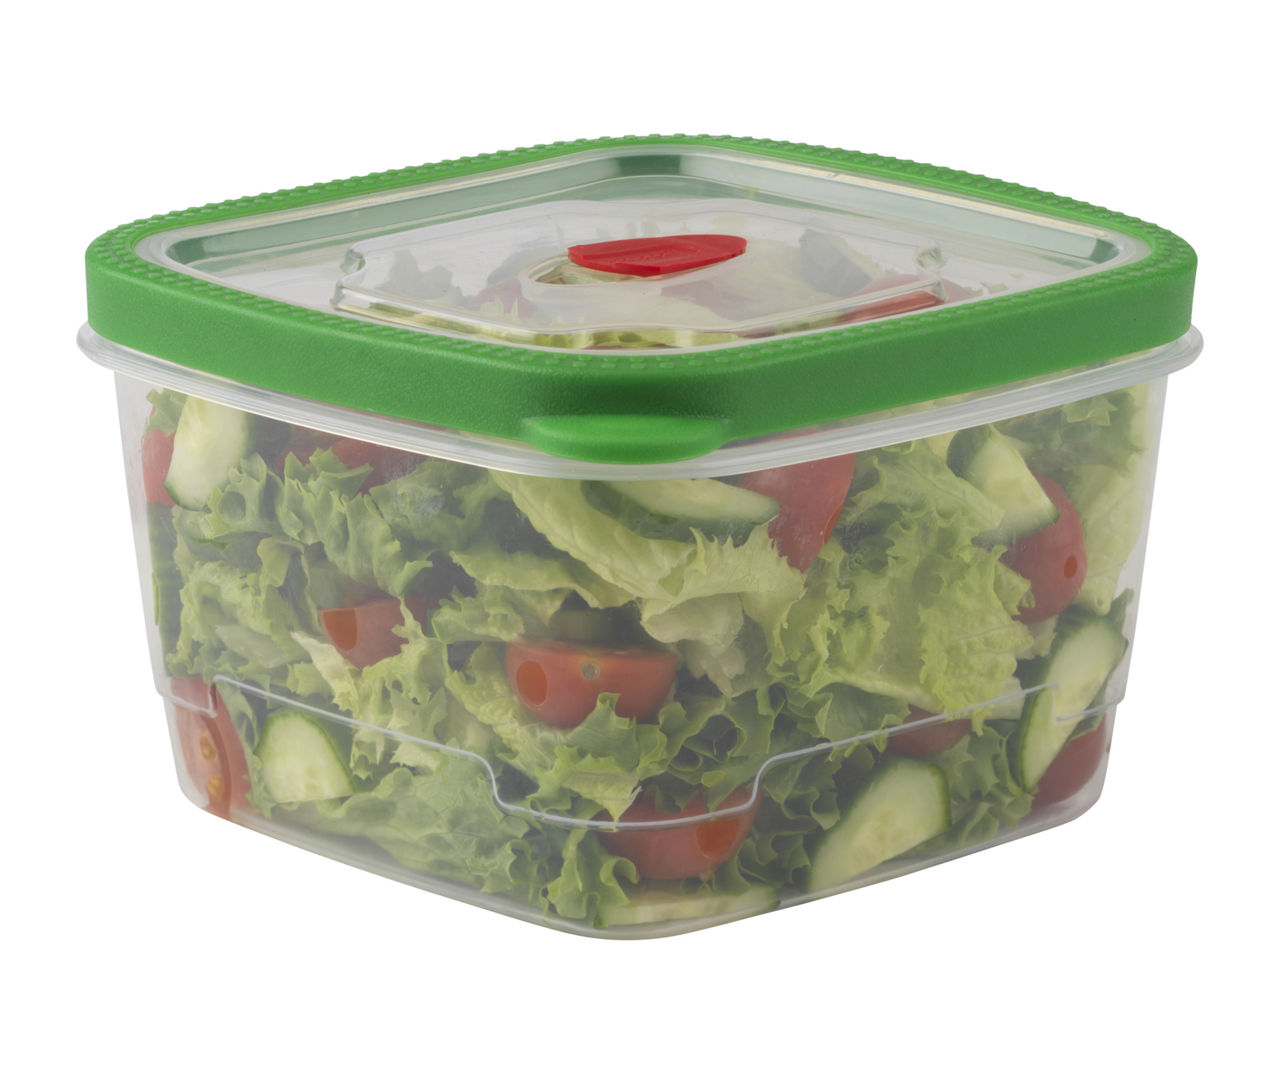 Good Cook - FLEXTRIM 7-Cup Food Storage Container